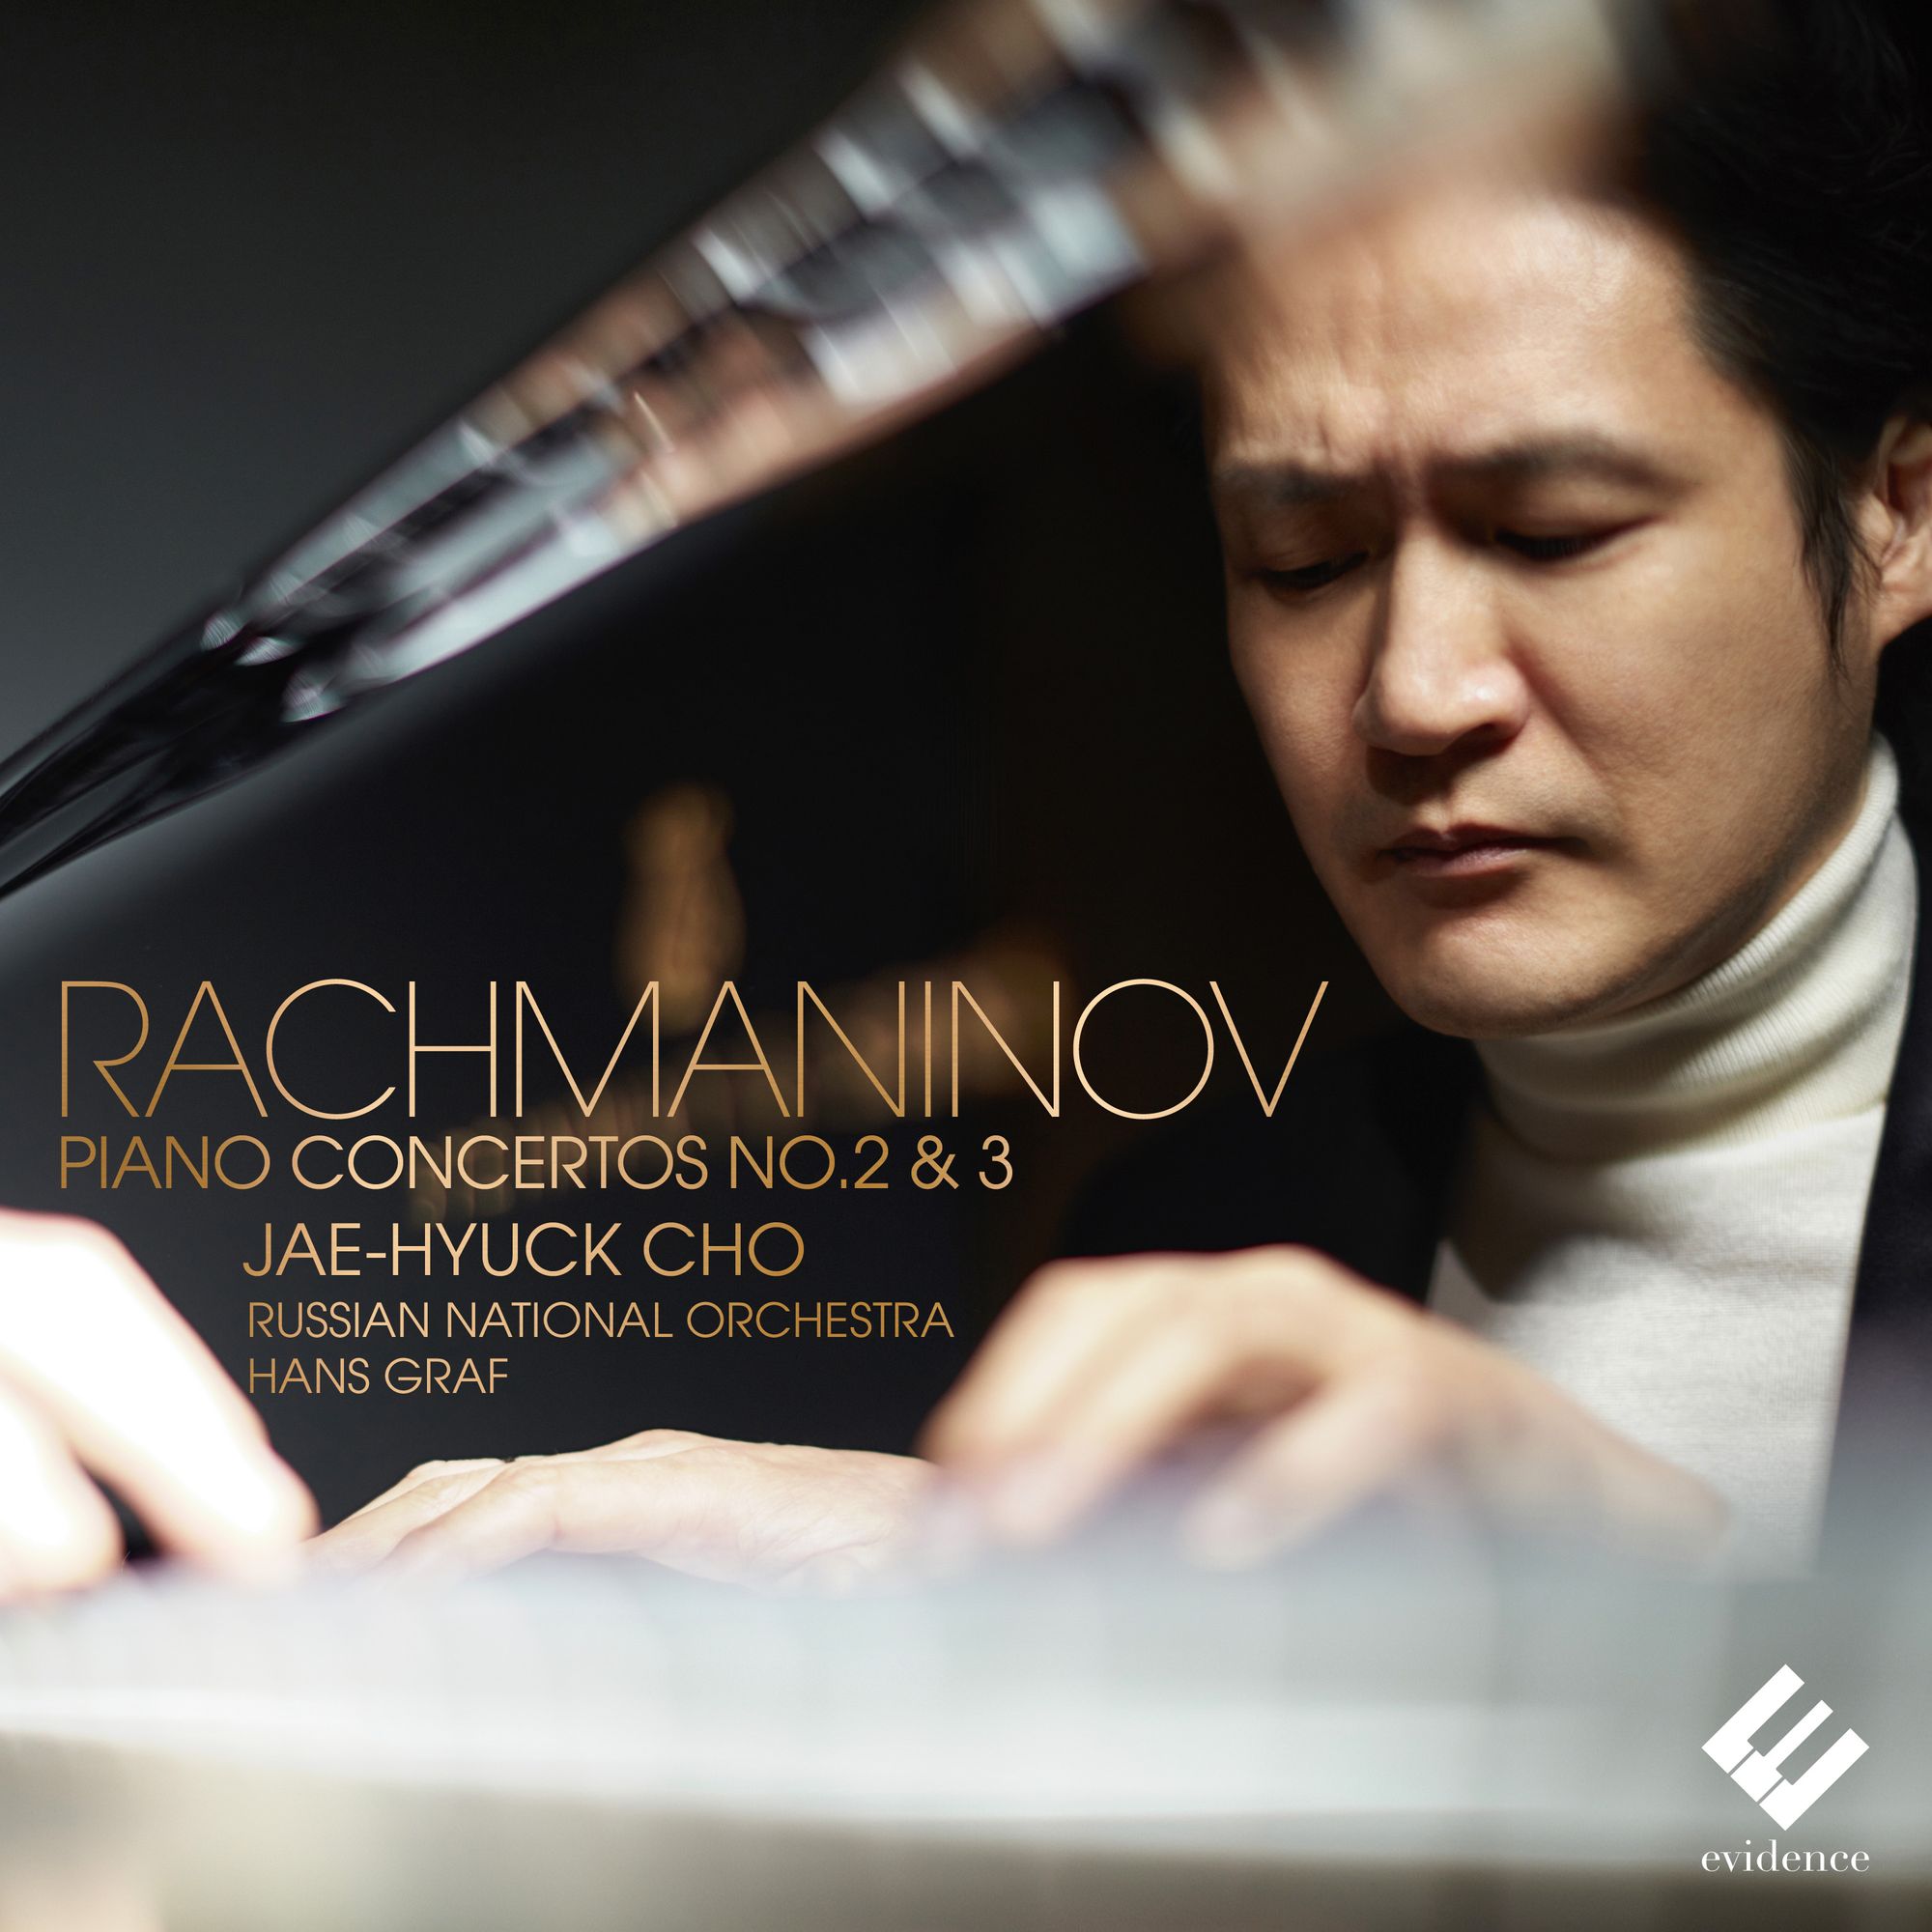 Jae-Hyuck Cho plays Rachmaninov Piano Concertos